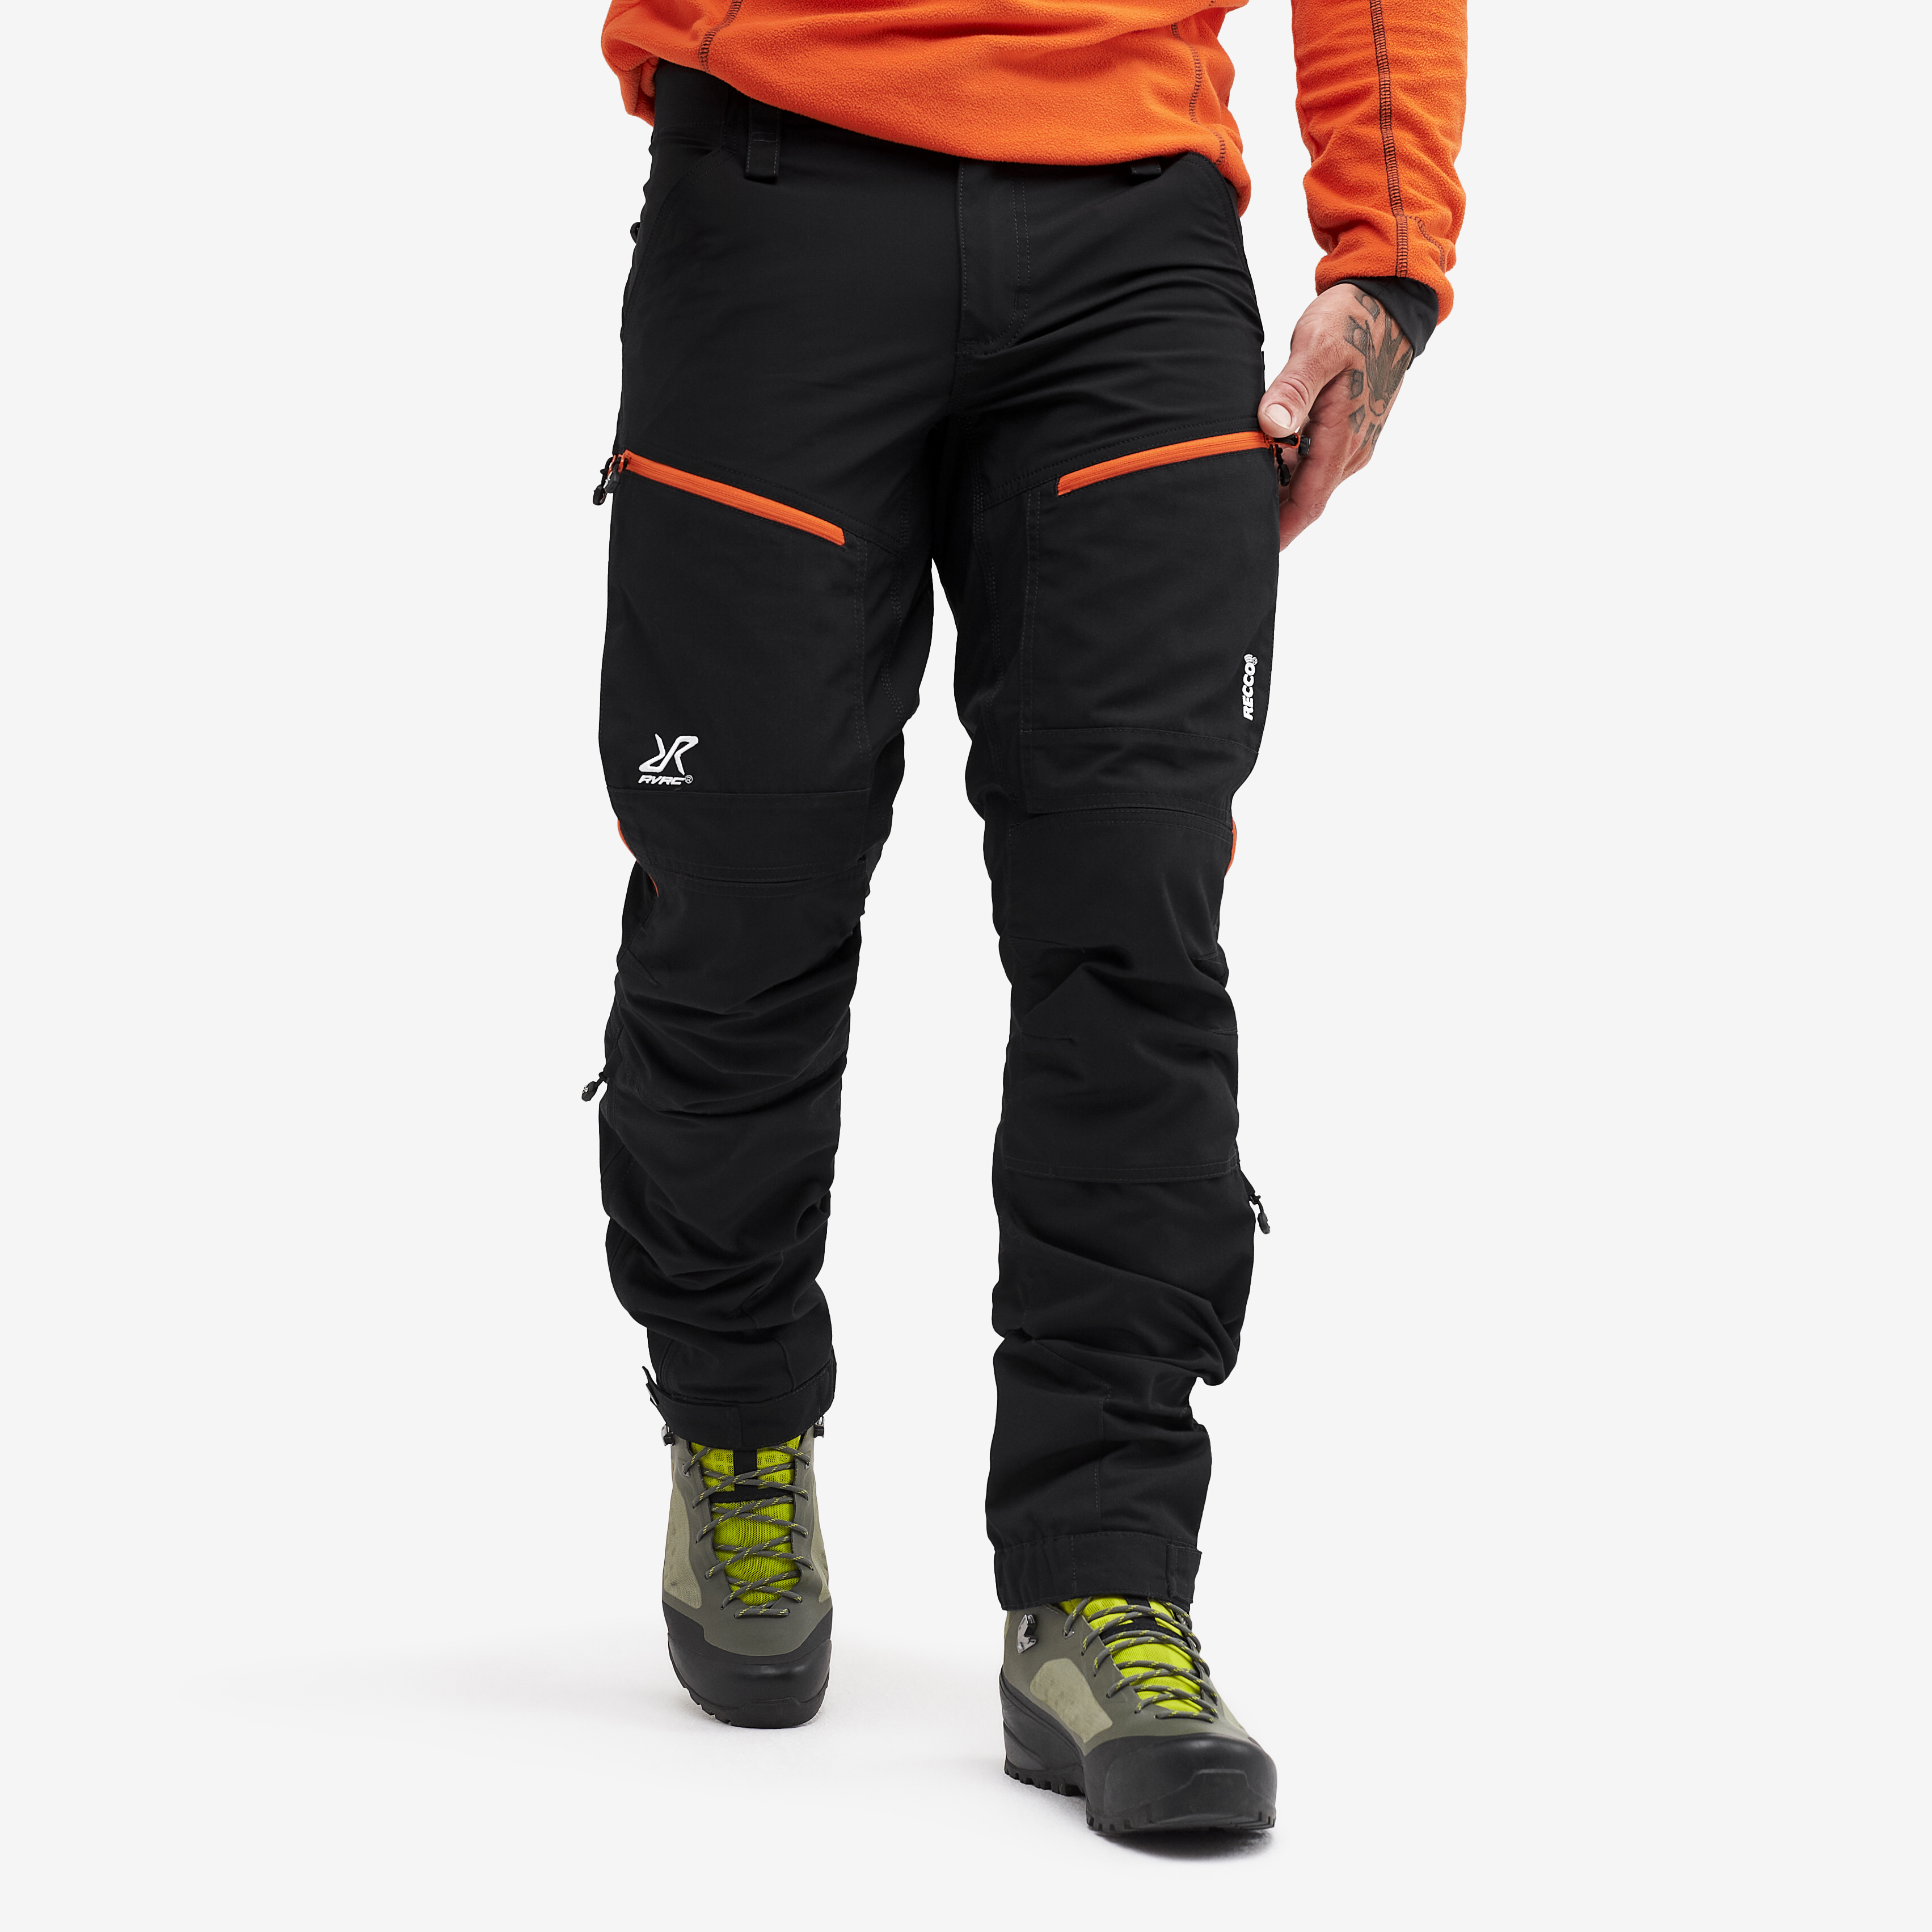 RVRC GP Pro Rescue Pants Black/Orange 2.0 Pánské